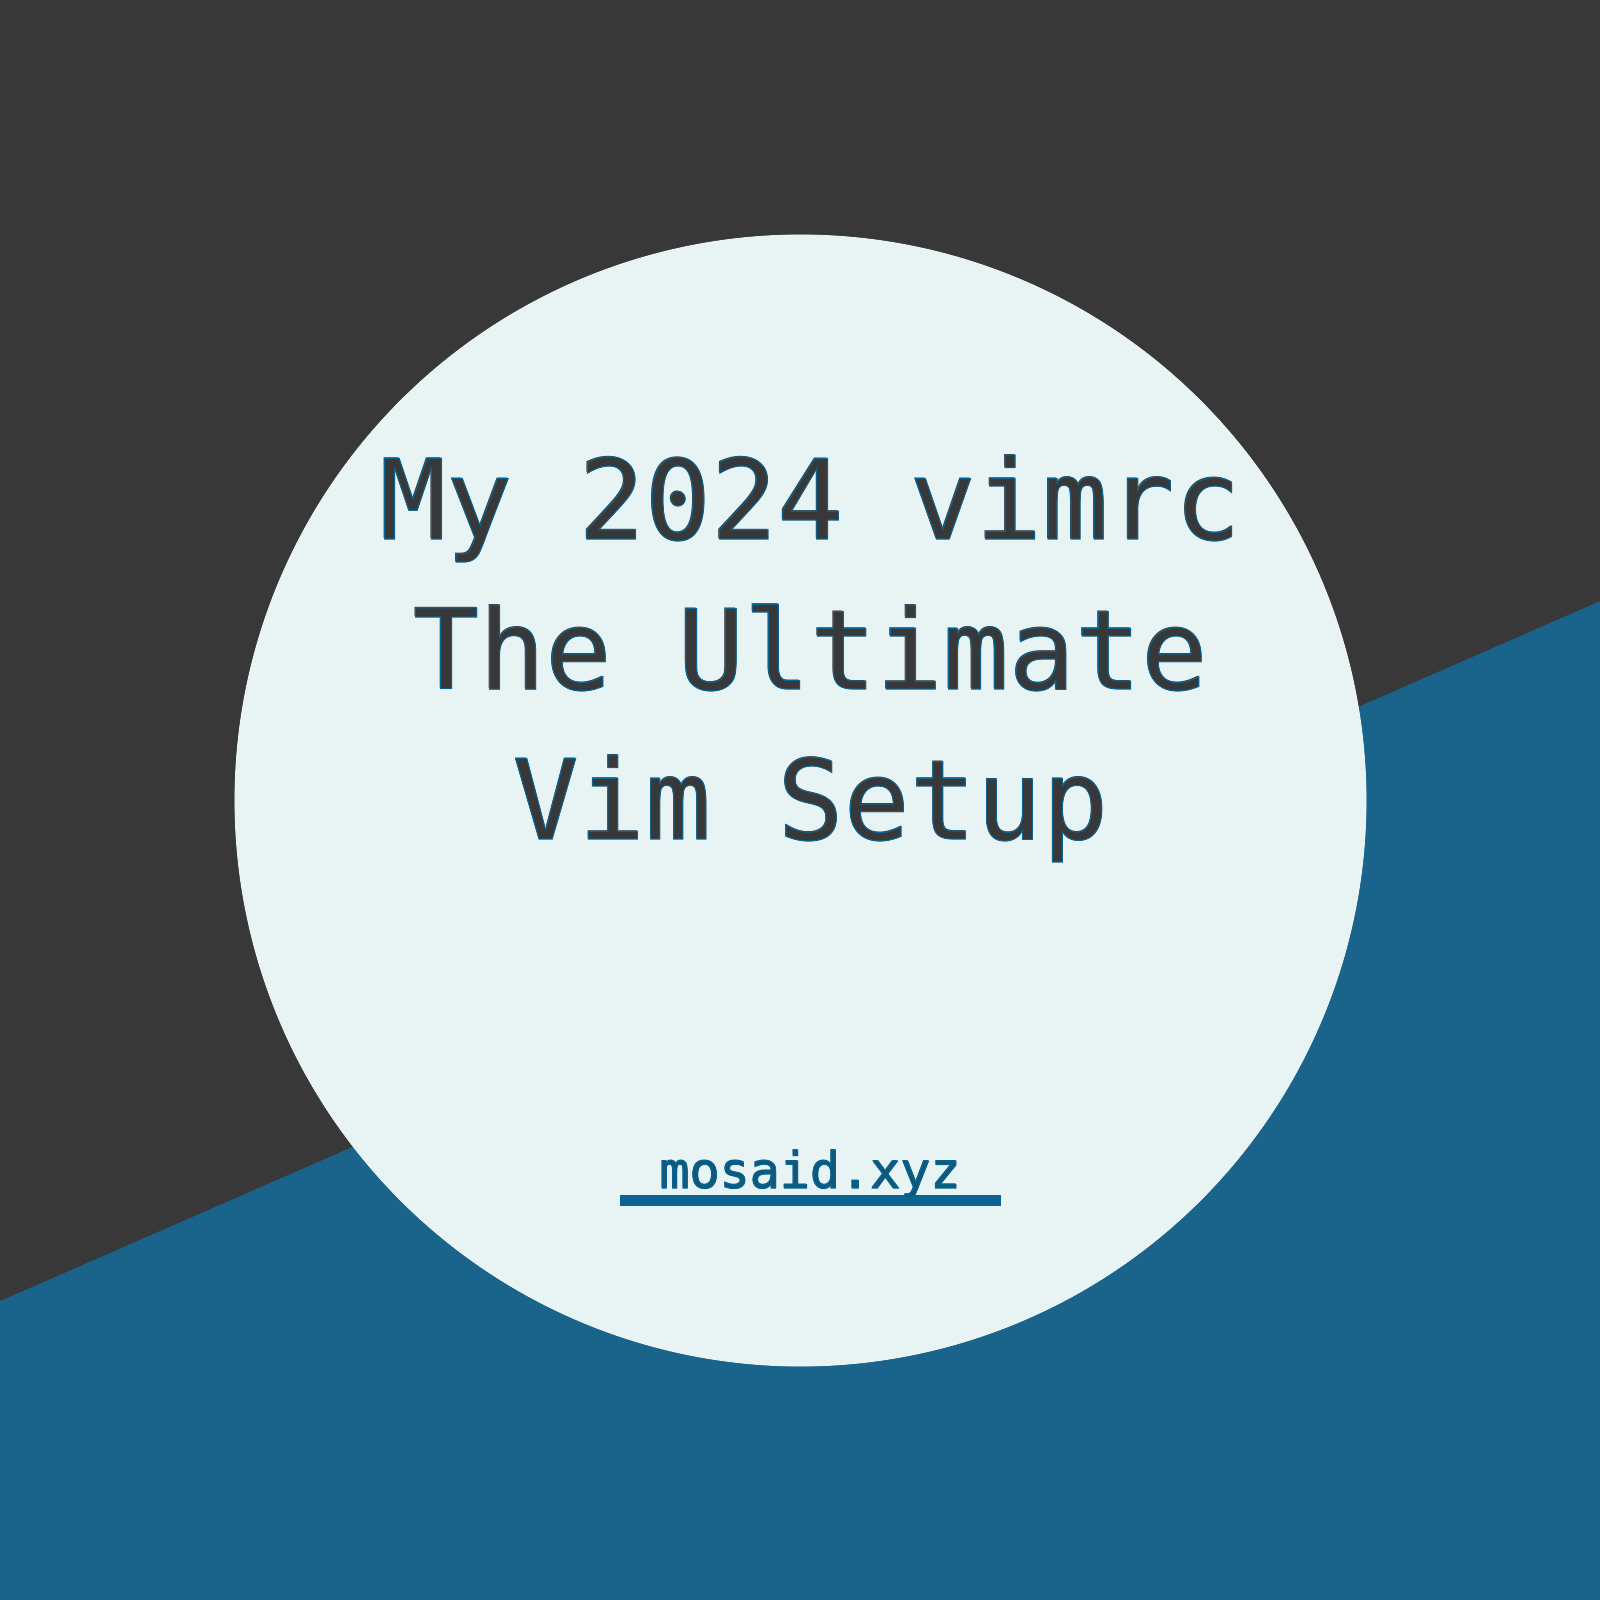 Vim Configuration Guide: Tips for Installing, Customizing, and Optimizing Vim